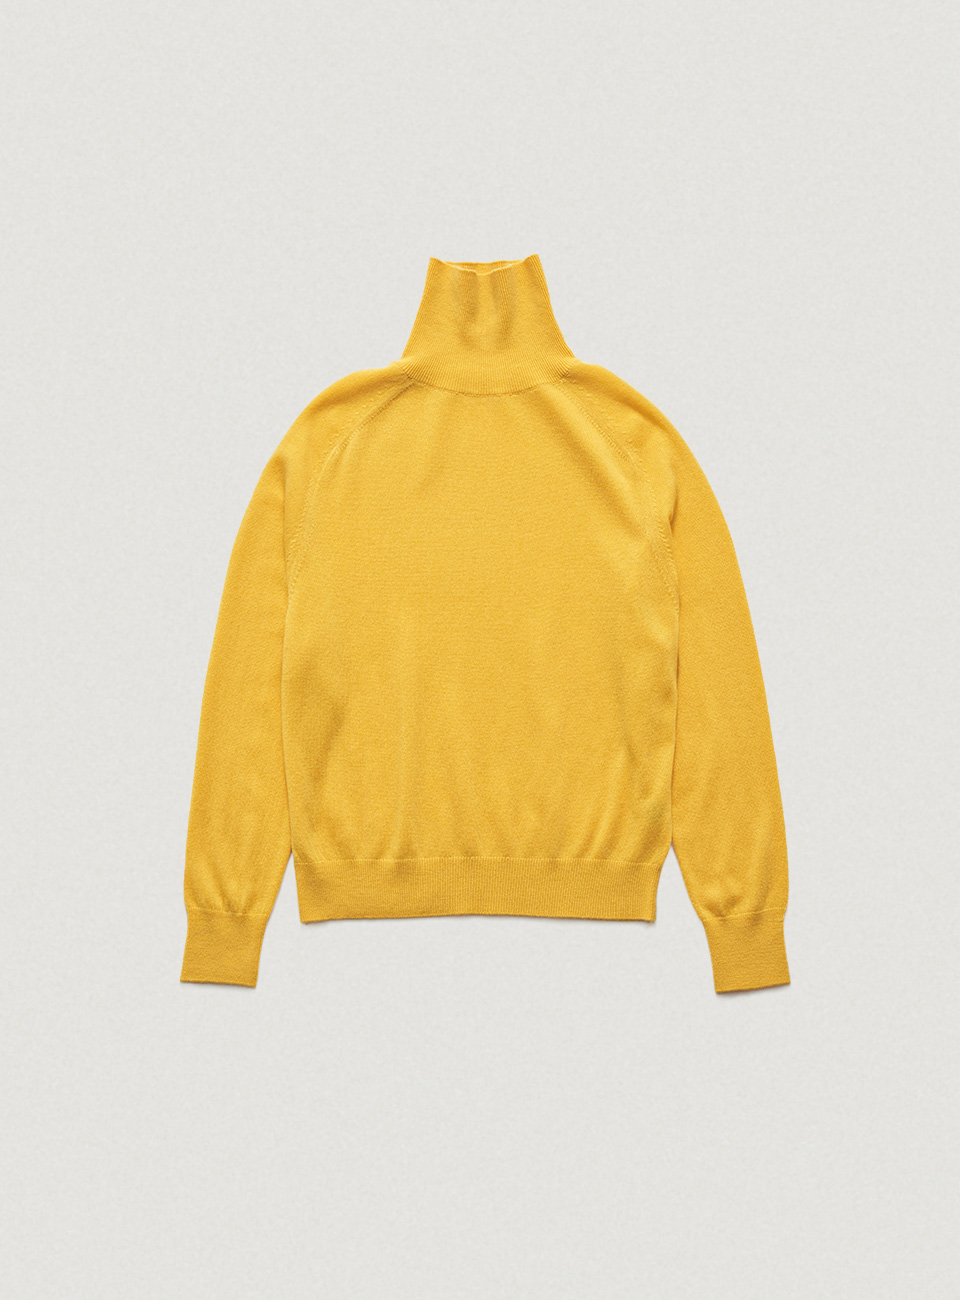 Yellow Days Turtleneck Knit Sweater